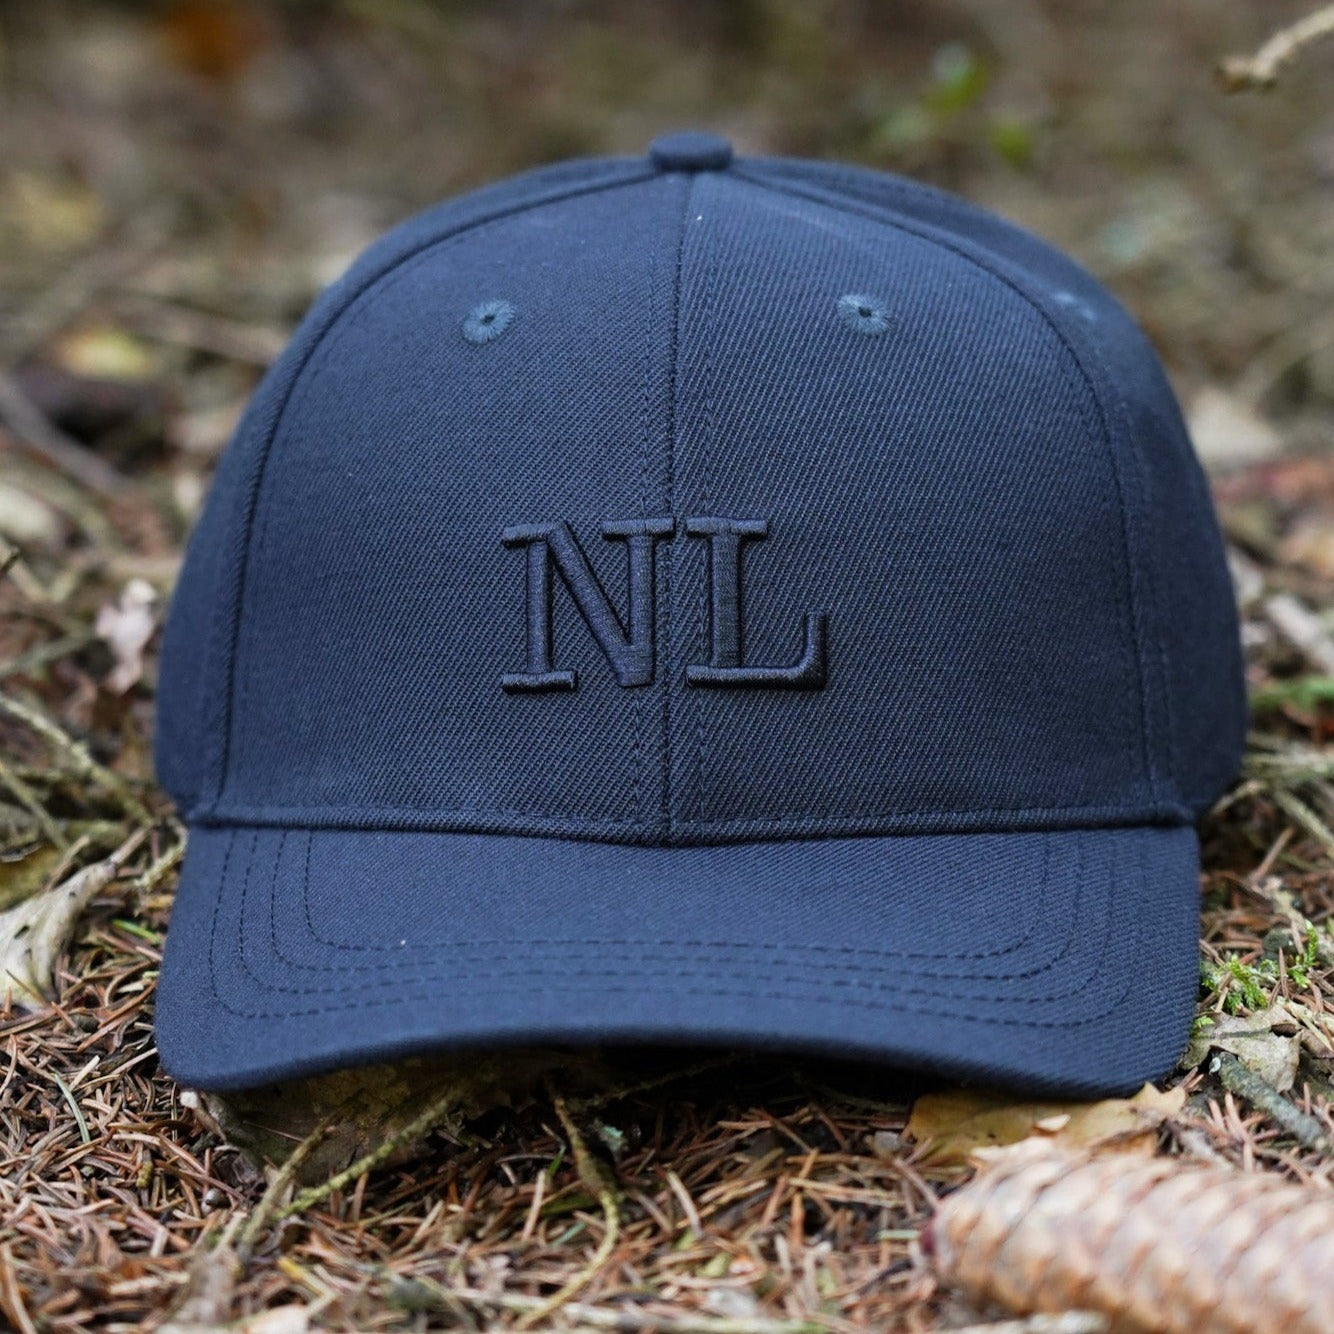 NL Dad cap - Navy